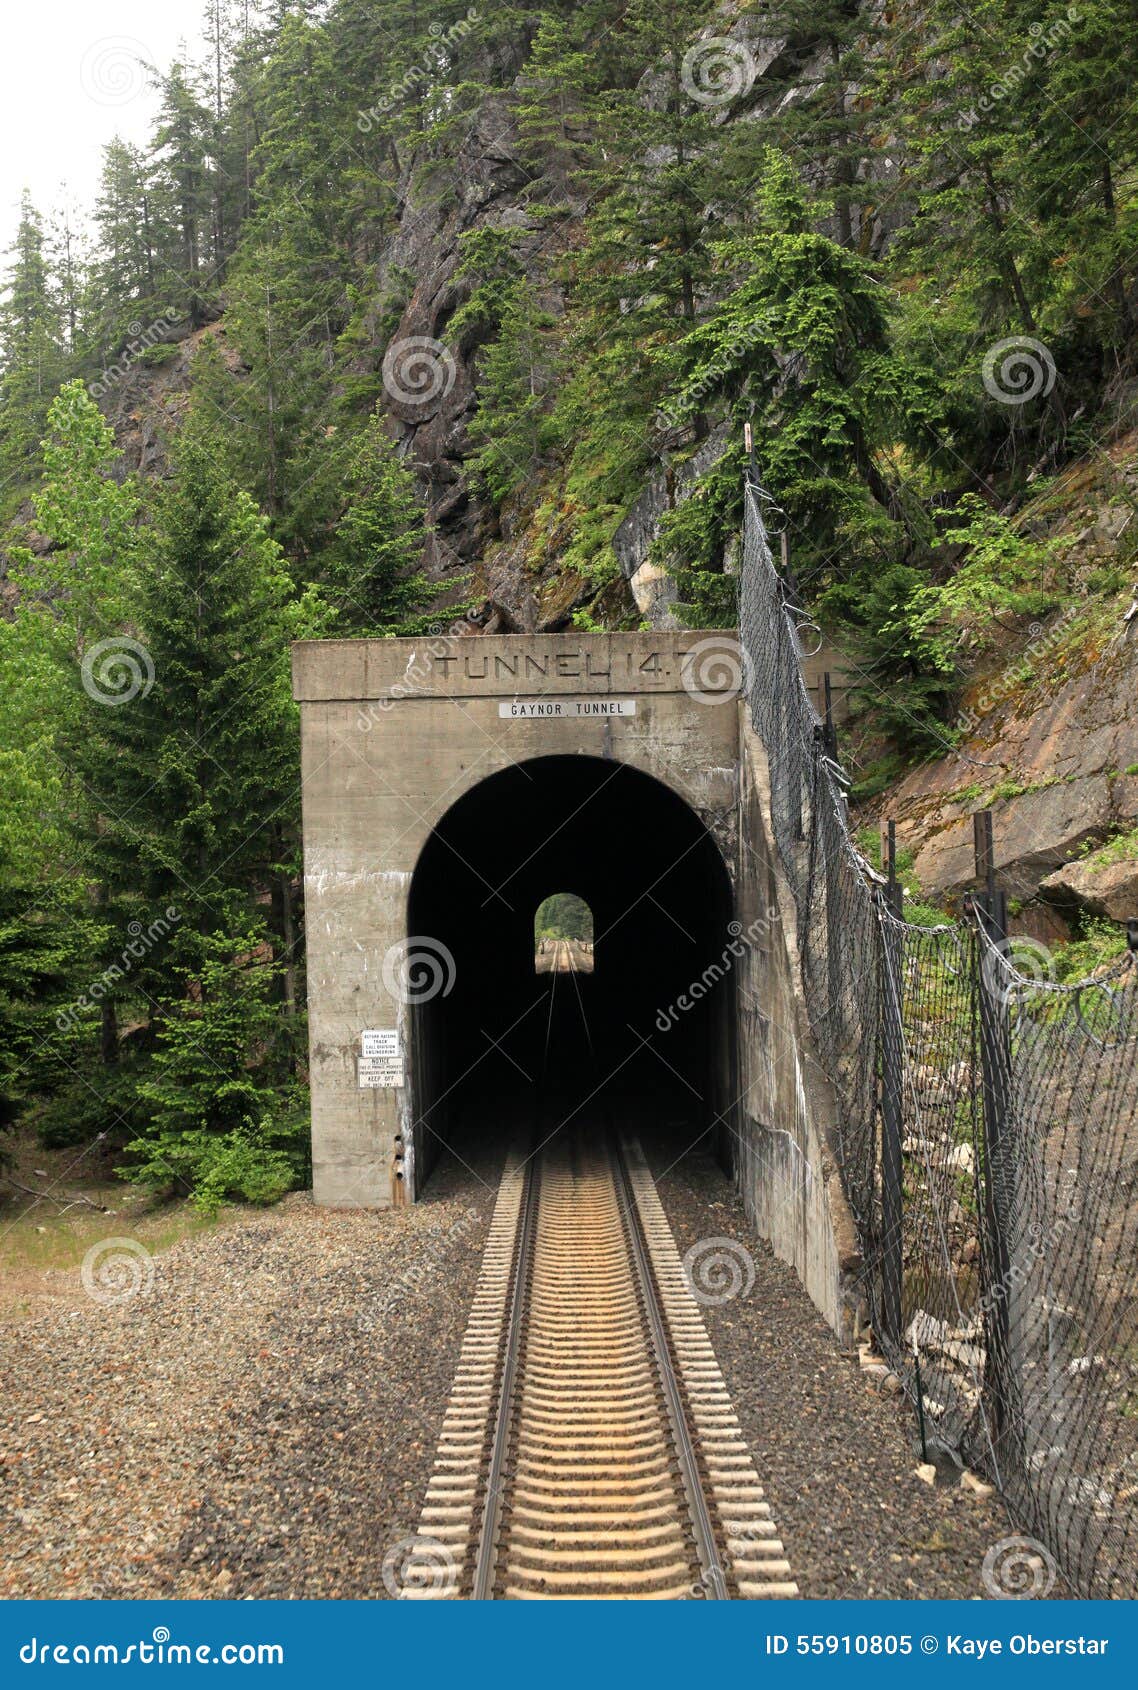 amtrak through the gaynor tunnel in montana